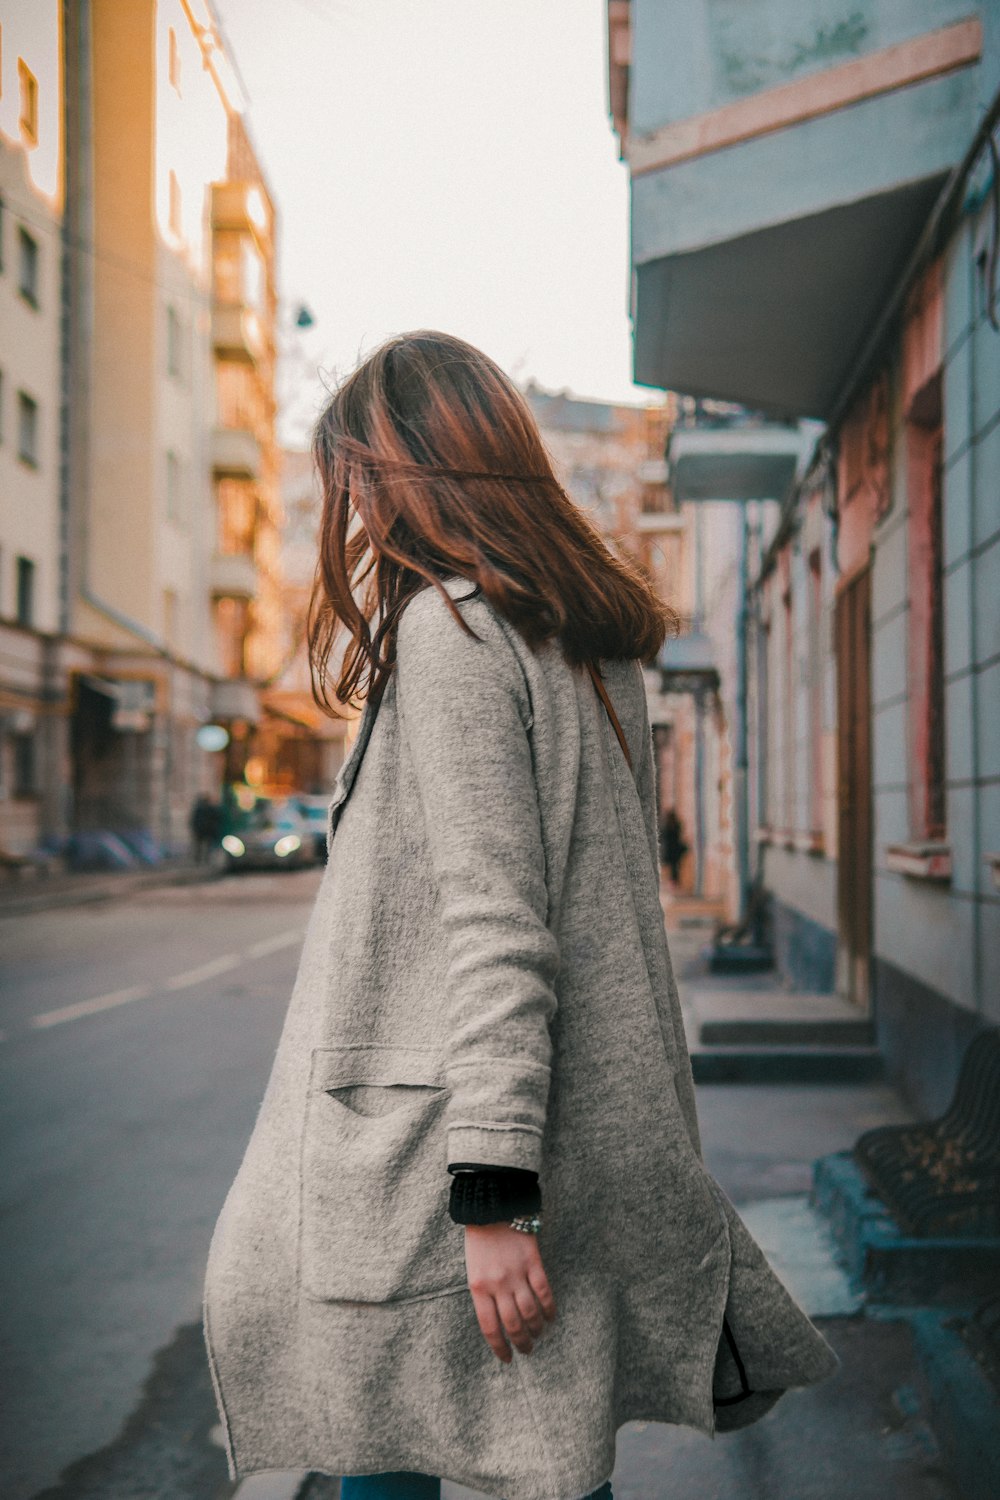 a woman walking down a street holding a handbag